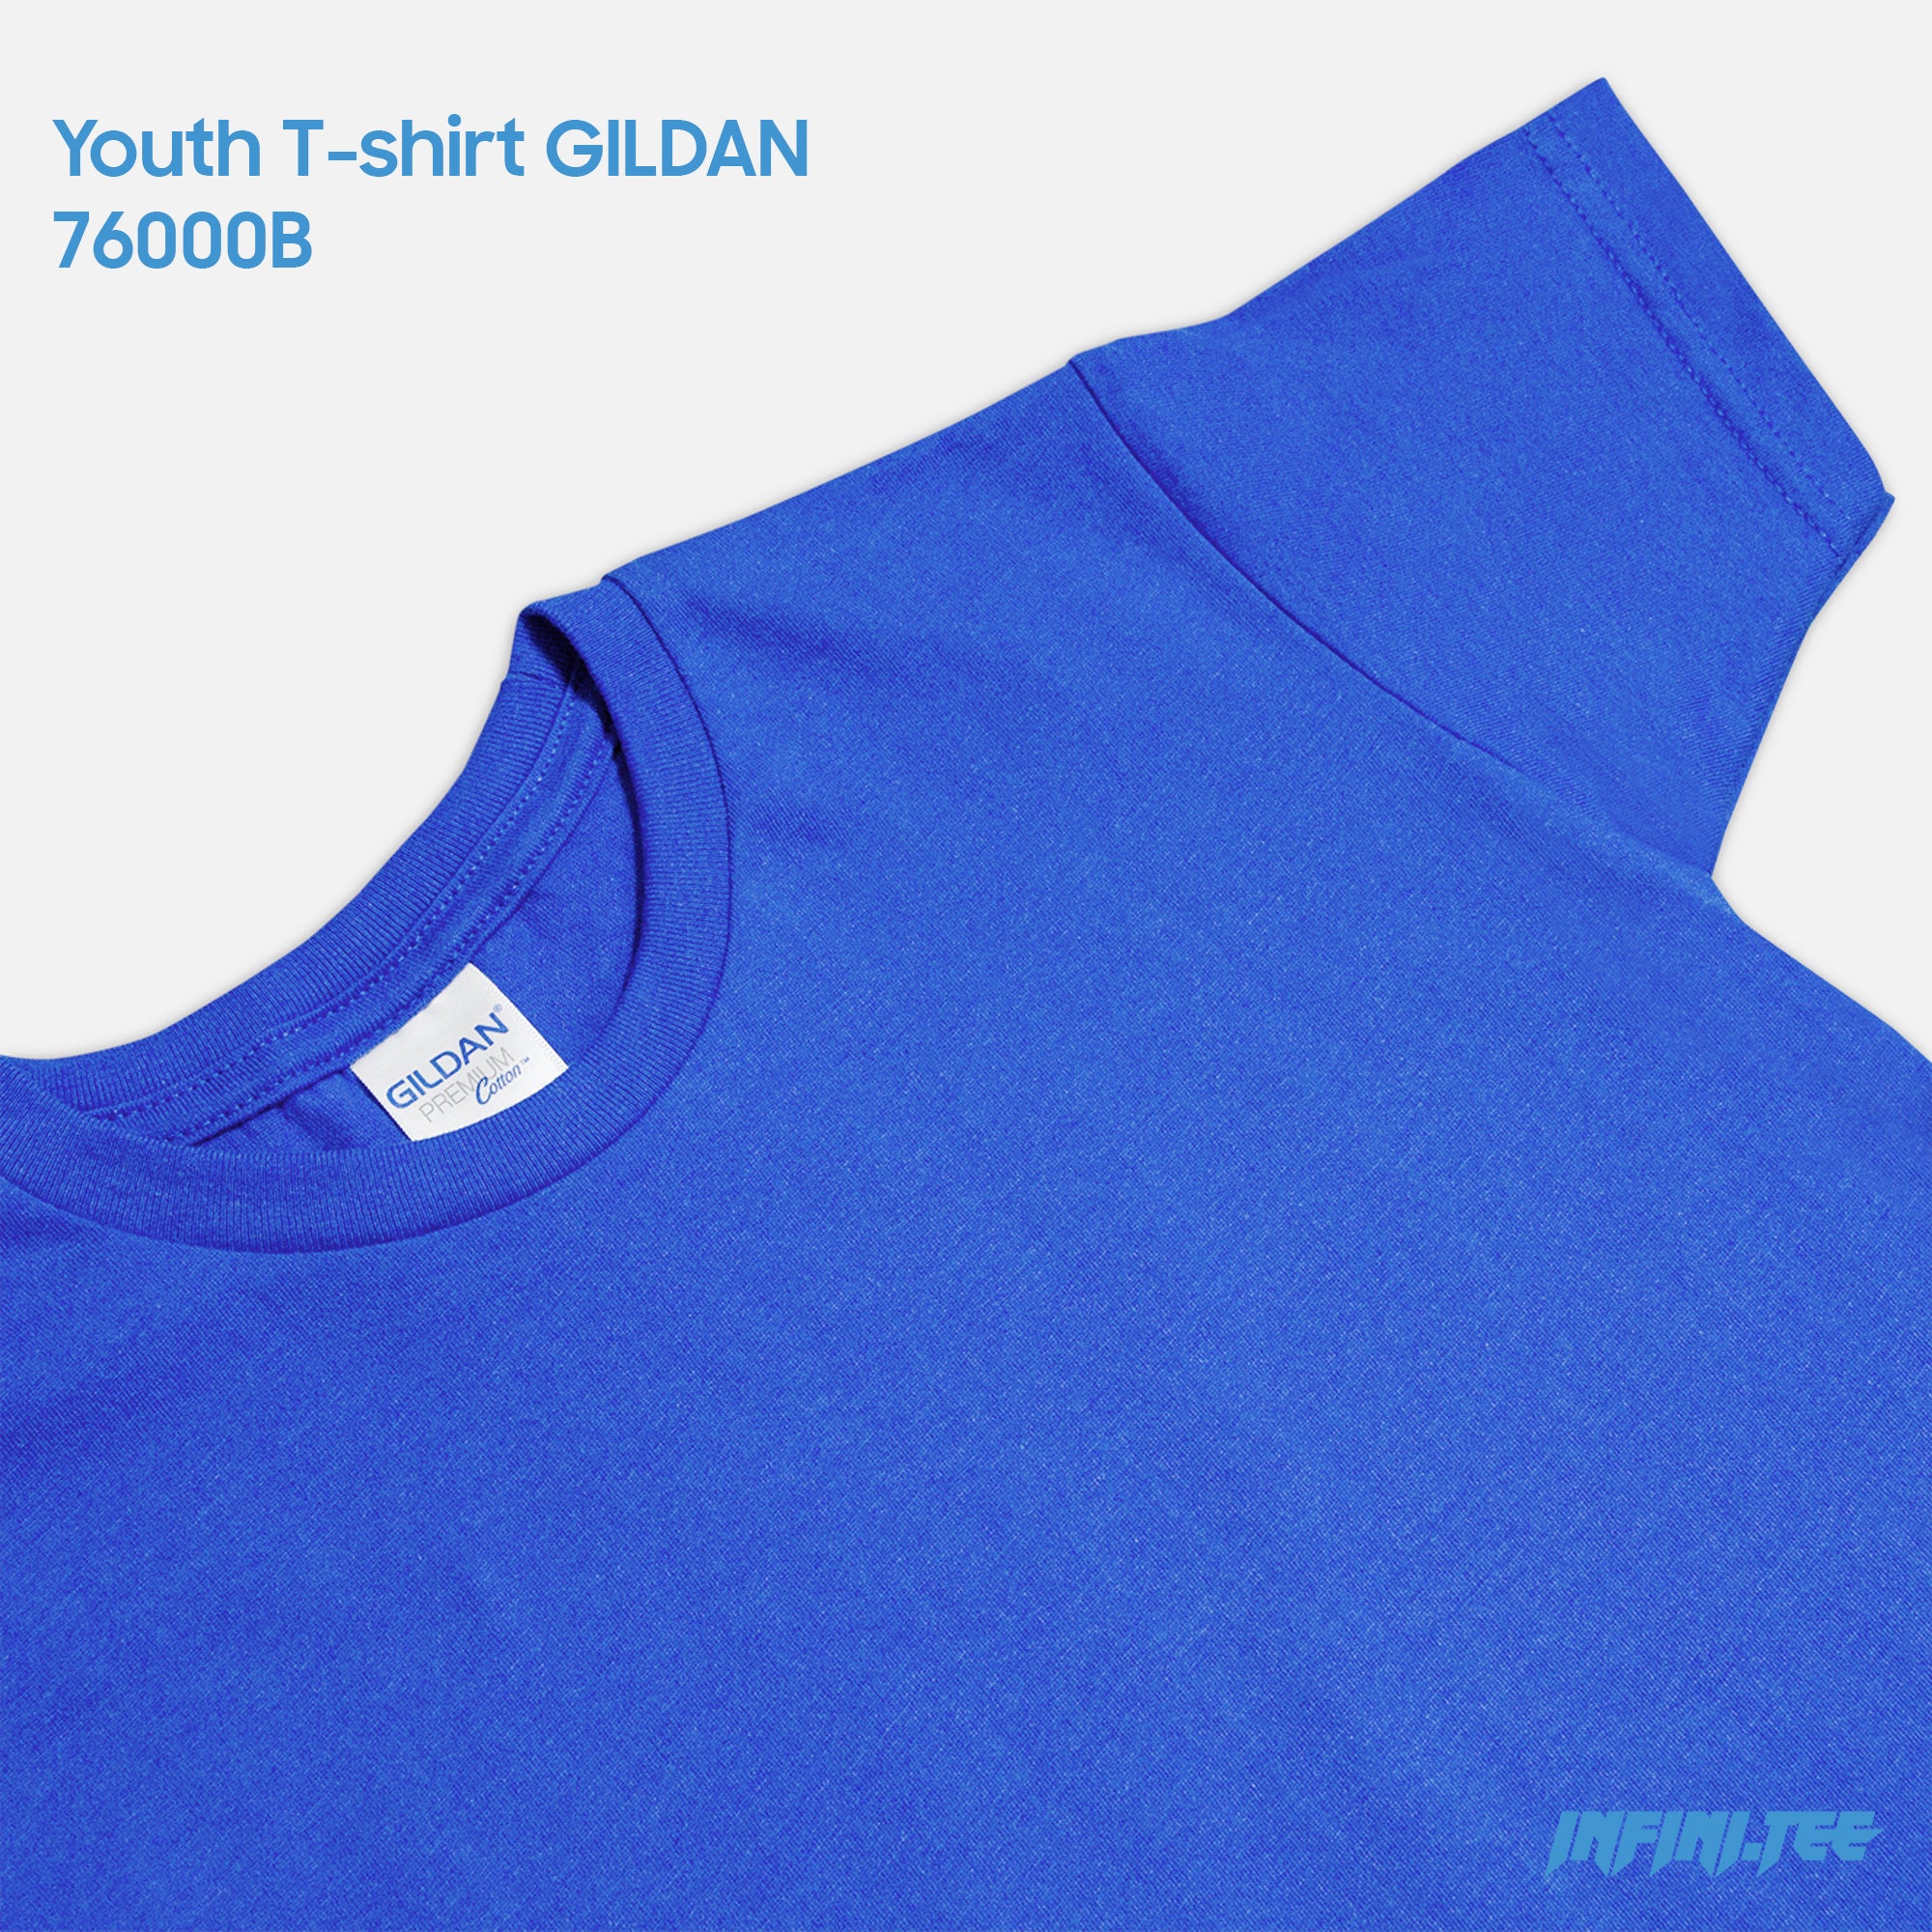 Youth T-shirt 76000B GILDAN - ROYAL